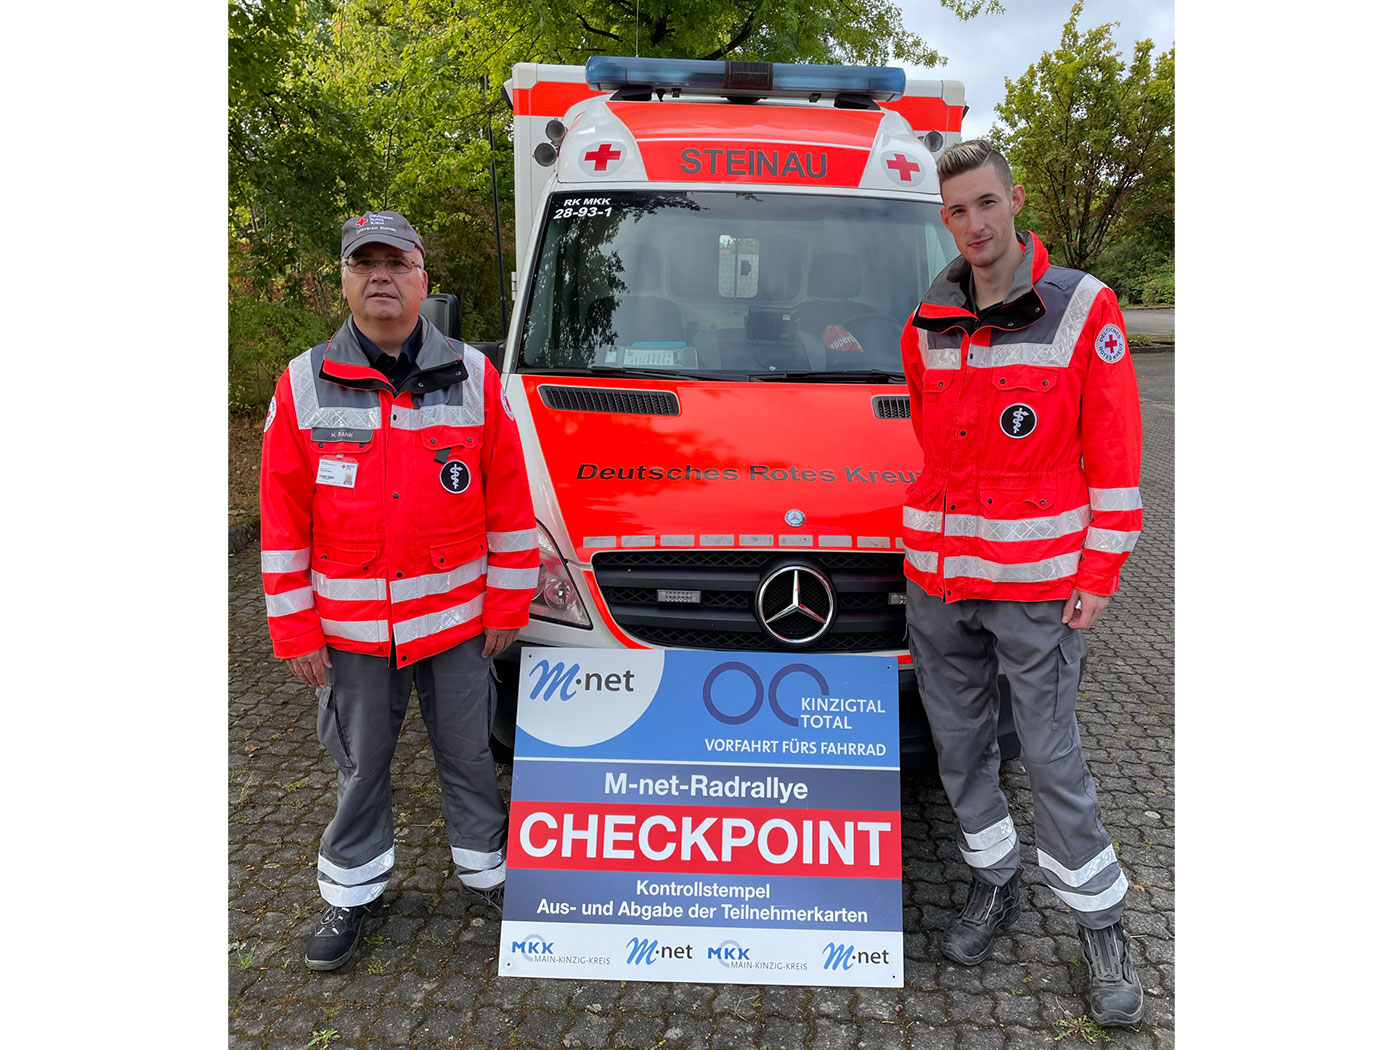 OV Steinau Checkpoint beim Kinzigtal Total